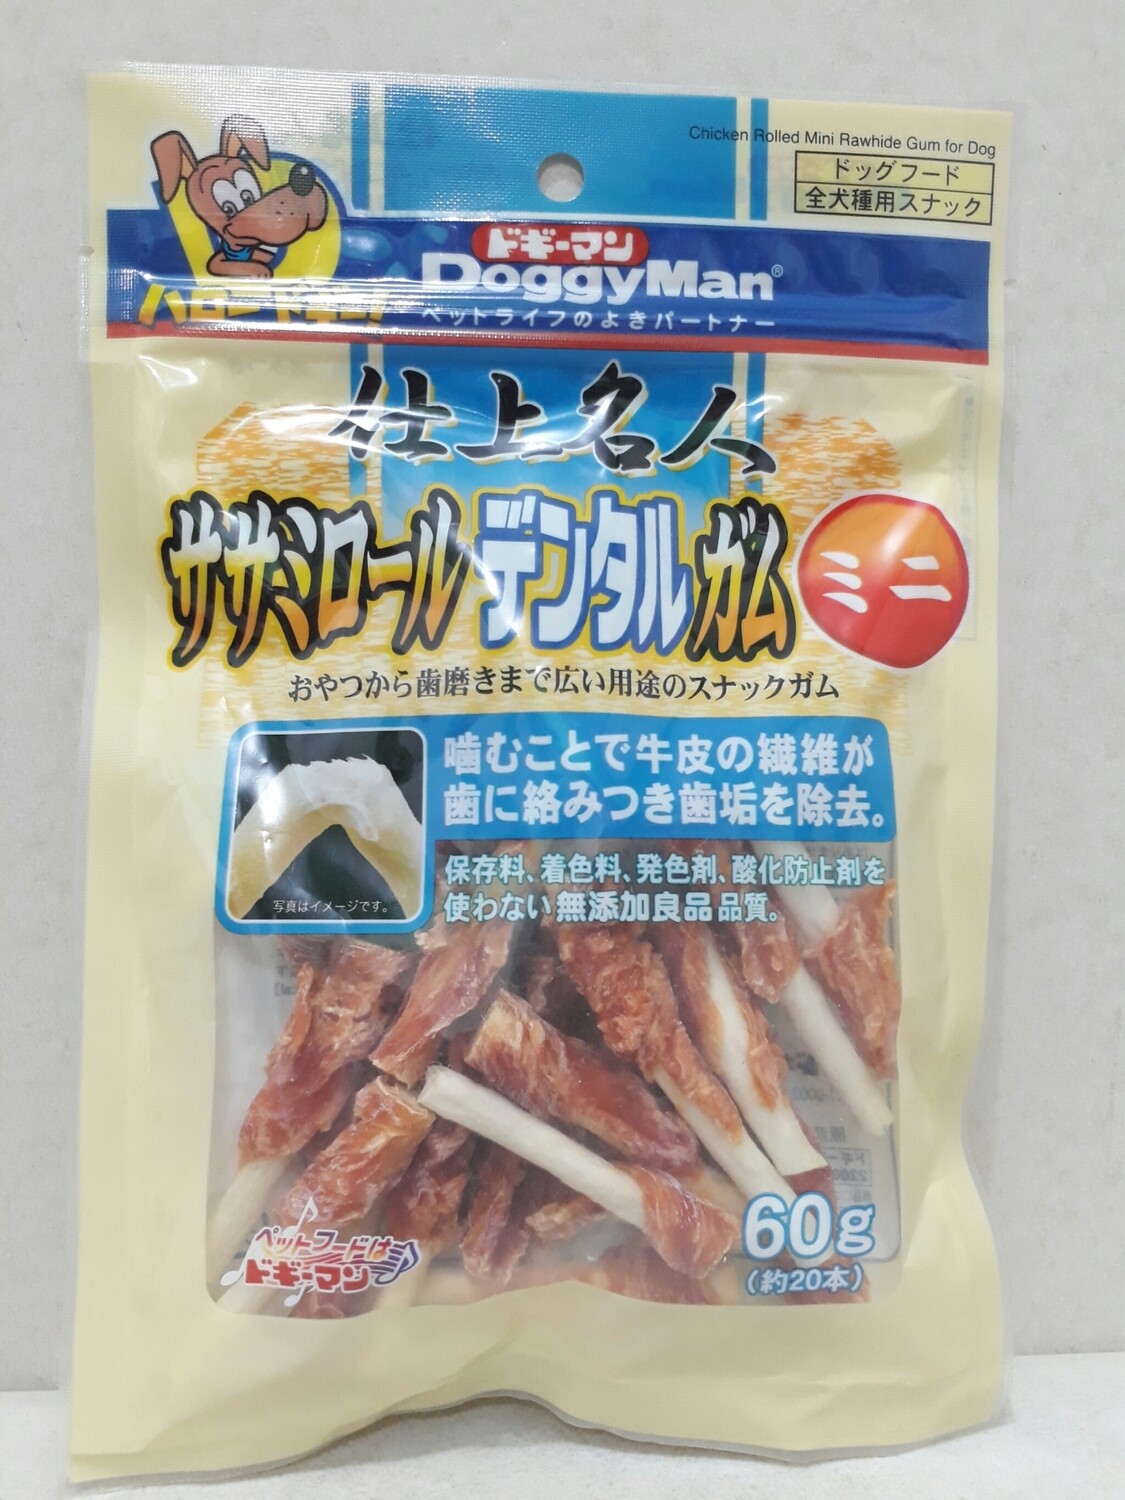 Doggyman Chicken Fillet with Mini Dental Gum 60g